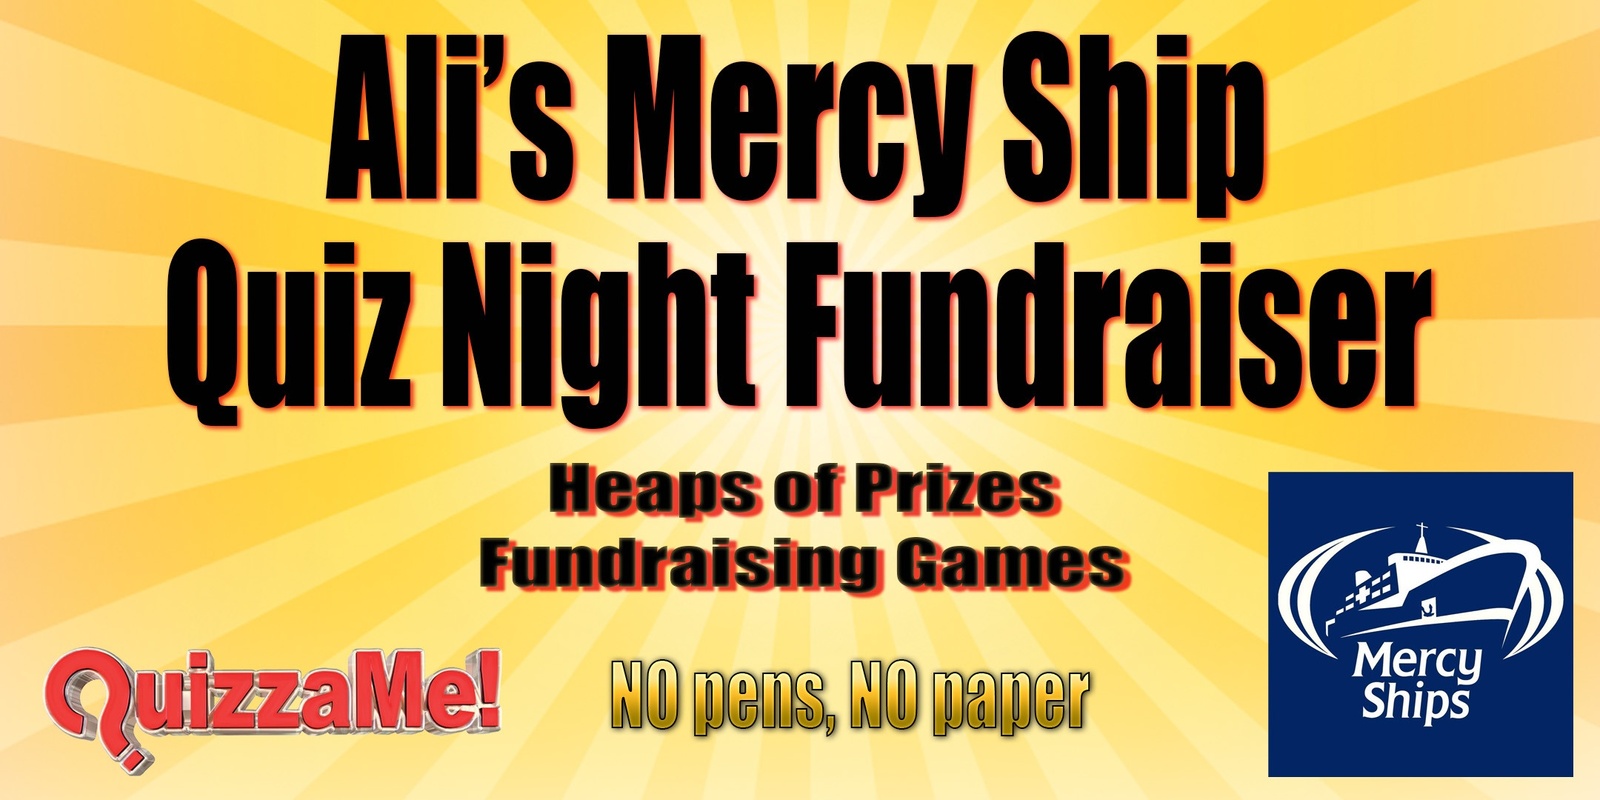 Banner image for Ali’s Mercy Ship Quiz Night Fundraiser